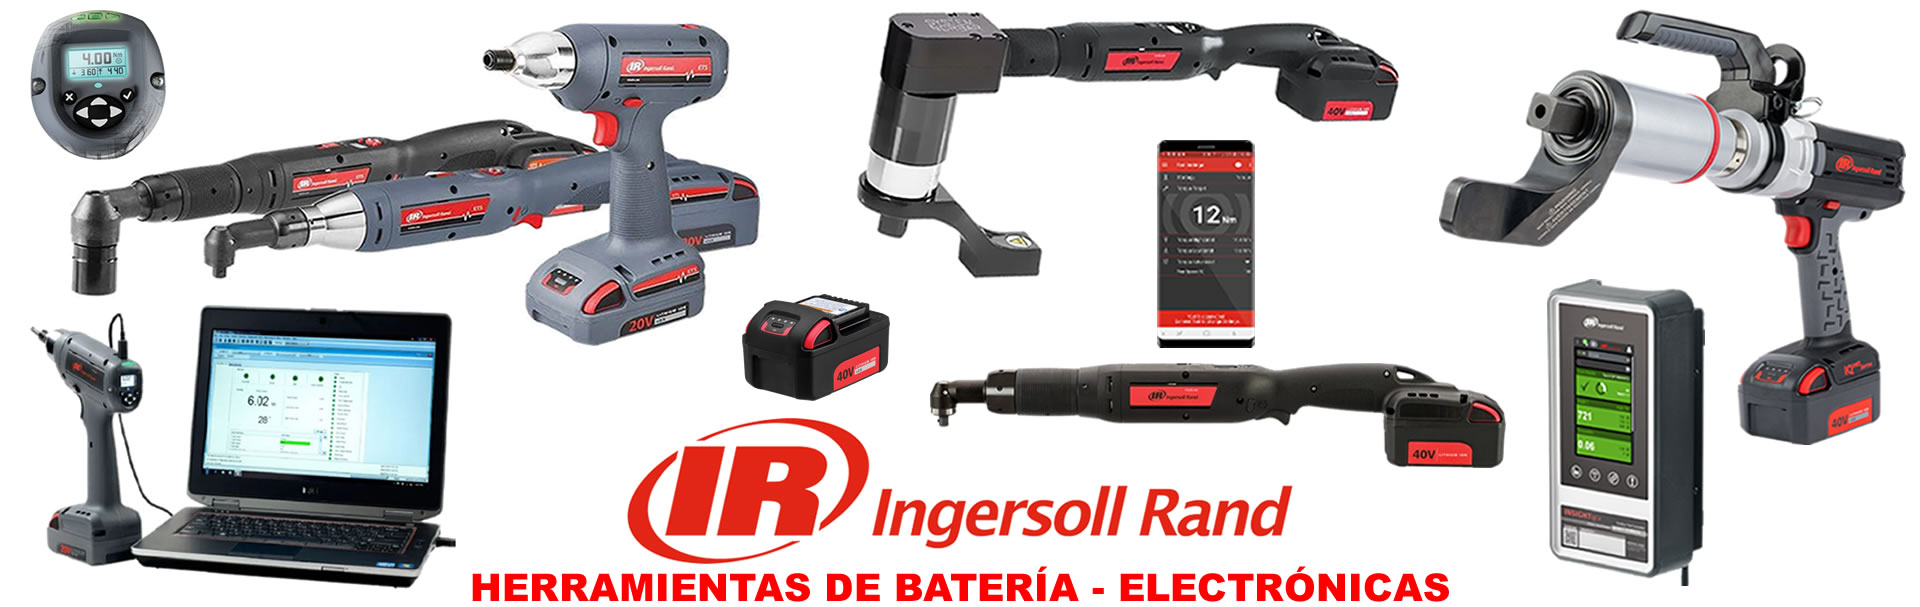 alcaner_ingersoll-rand_soluciones-industria-automación_equipamento_maquinaria_servicio-tecnico_distribuidor-oficial-ingersoll-rand_madrid-espana_banner-4-ir-bateria